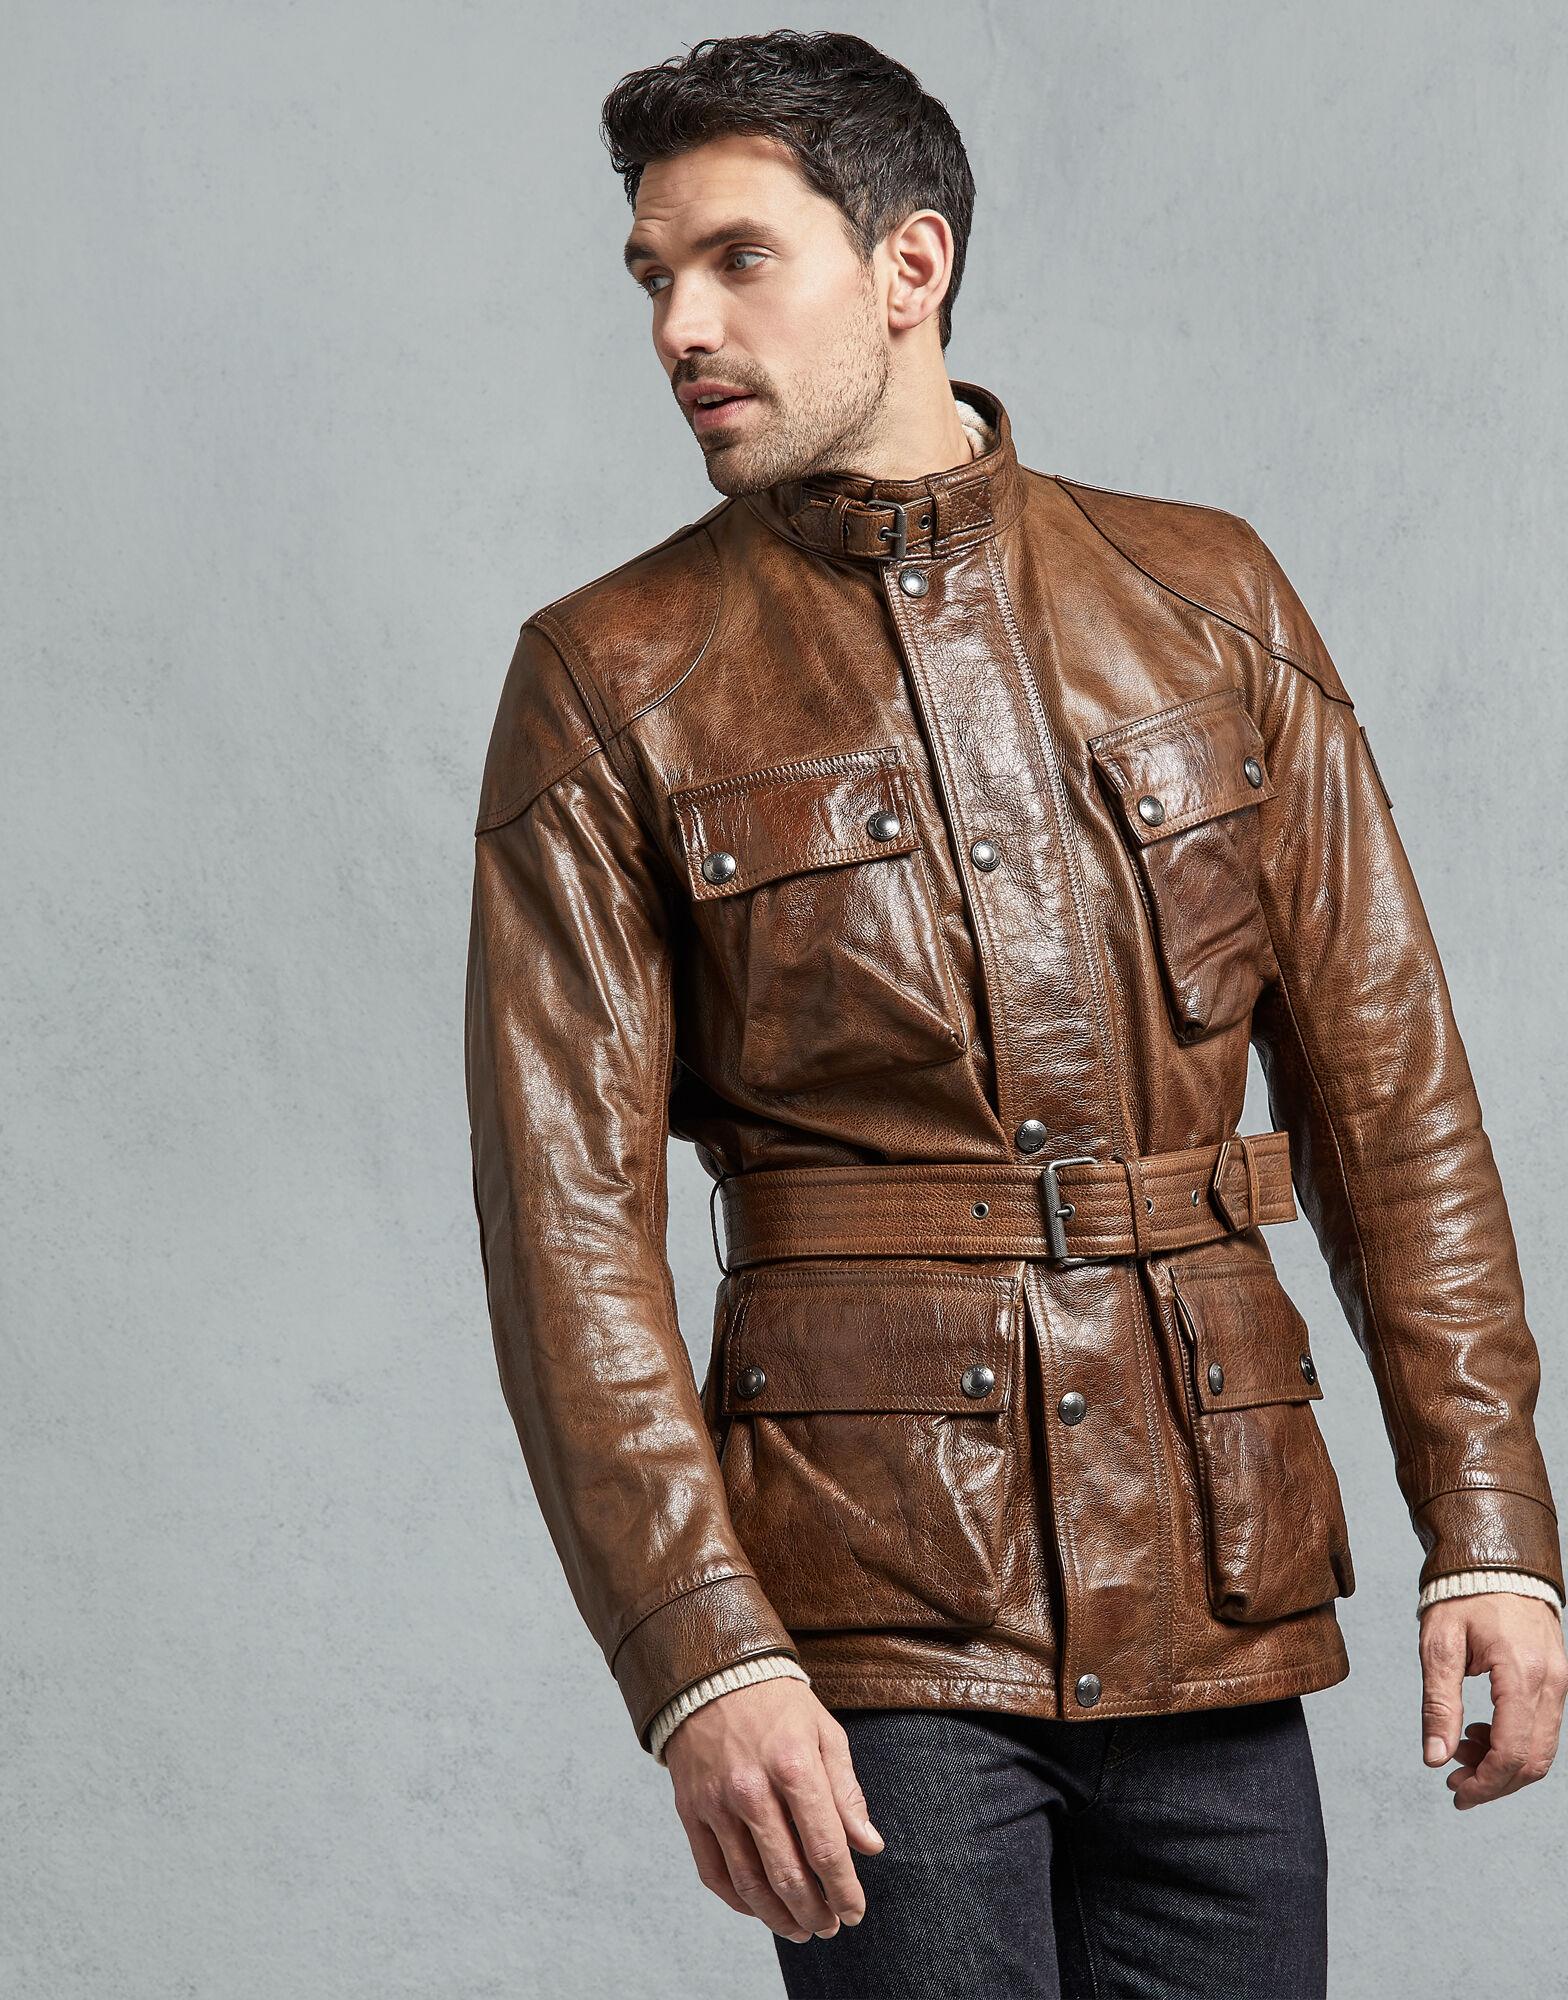 Belstaff Trialmaster Panther Leather Jacket in Cognac (Brown) for Men - Lyst